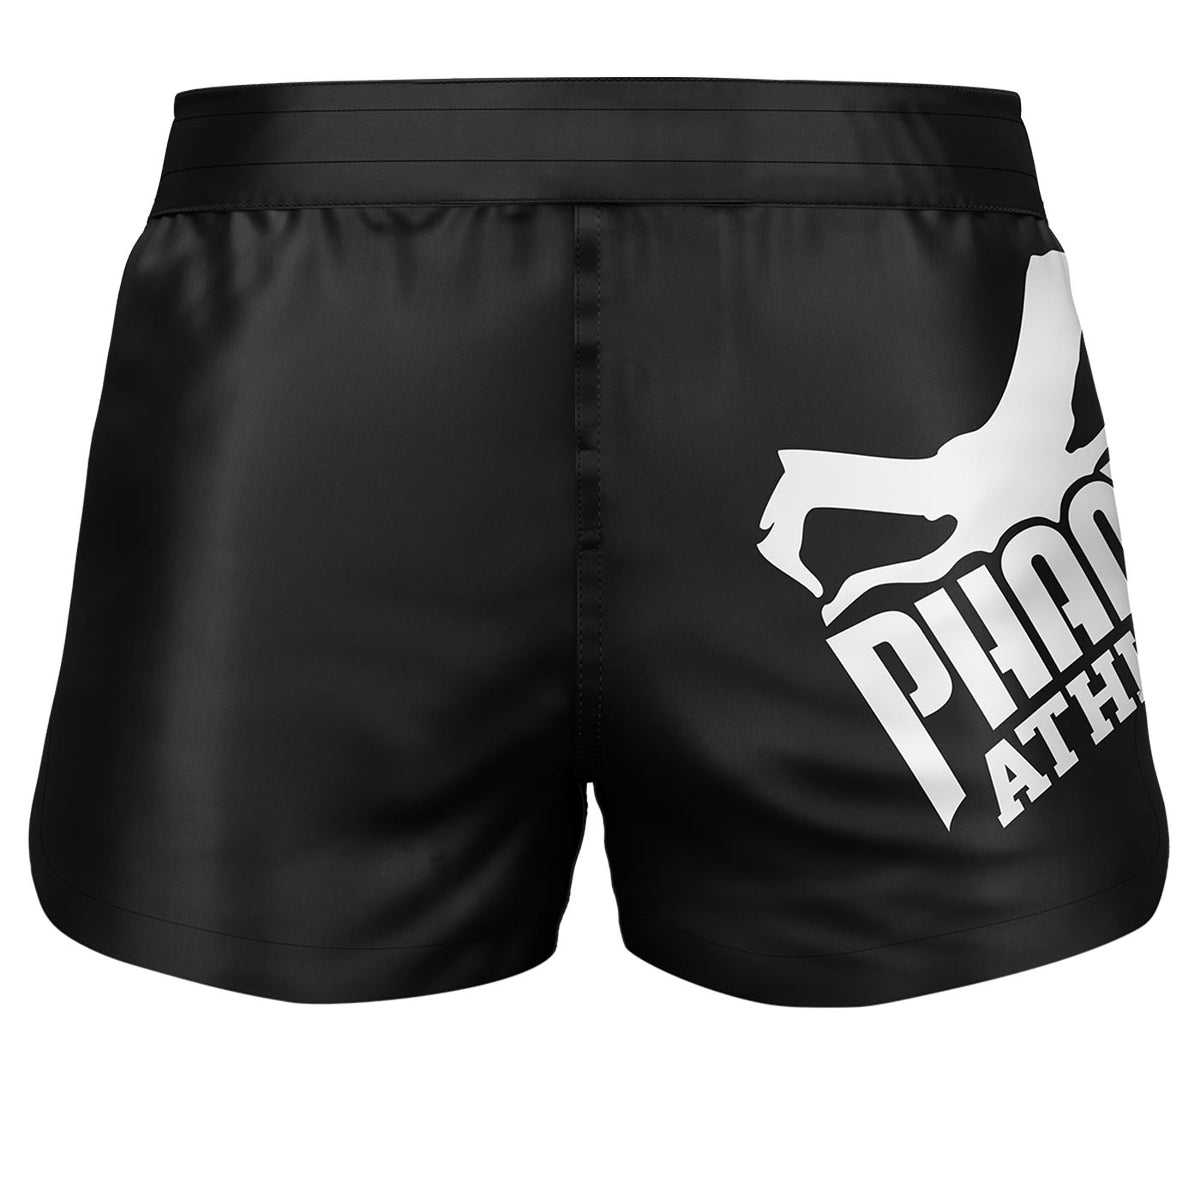 Phantom Fightshorts Fusion 2in1. Ultimative shorts til din kampsport. Ideel til MMA, Muay Thai, BJJ, wrestling og mere. I sort design med stort Phantom logo.